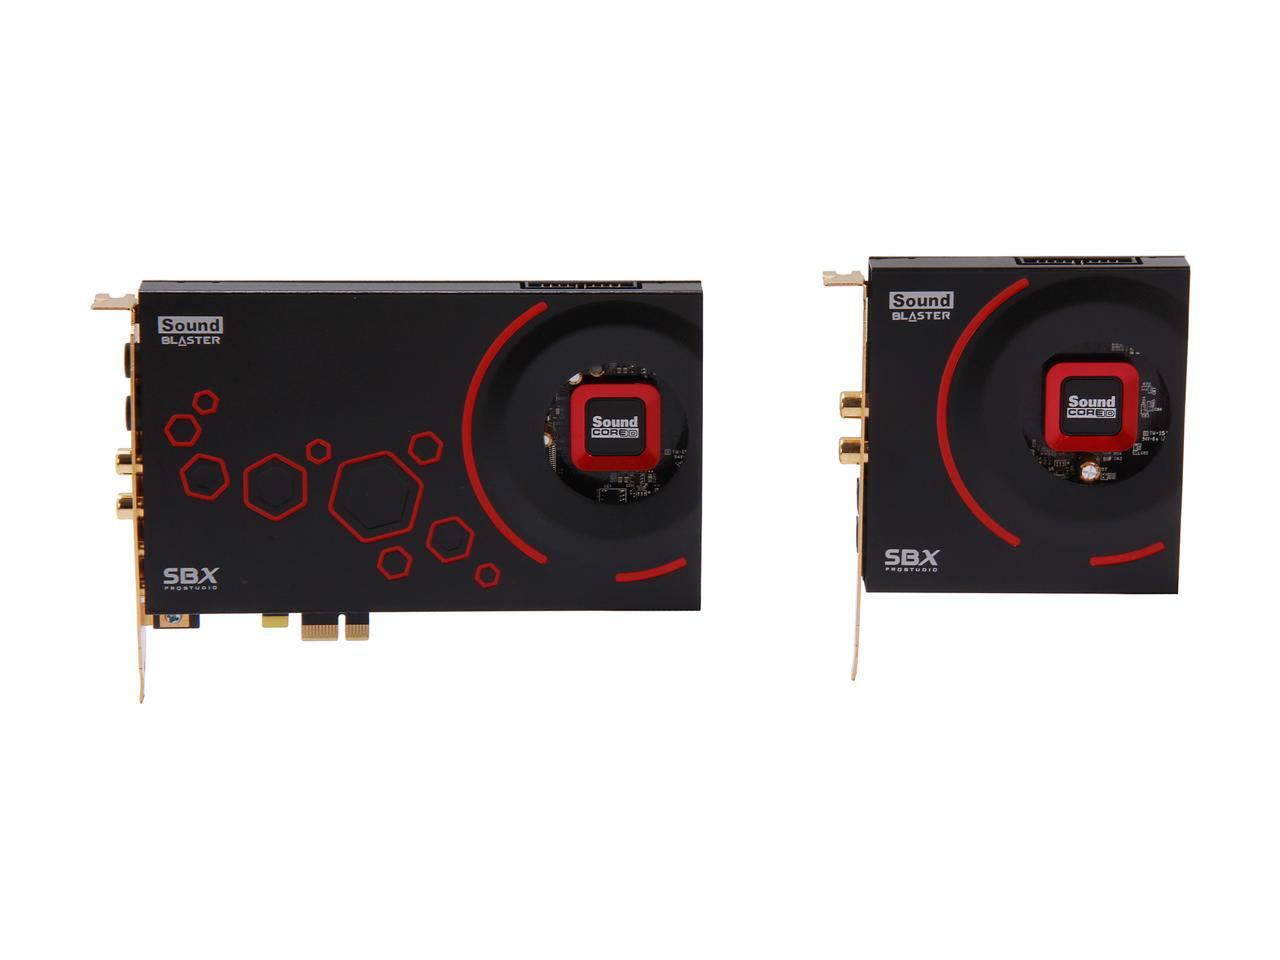 Creative Sound Blaster ZxR PCIe 124dB SNR Sound Card with 600ohm Headphone Amp and Desktop Audio Control Module